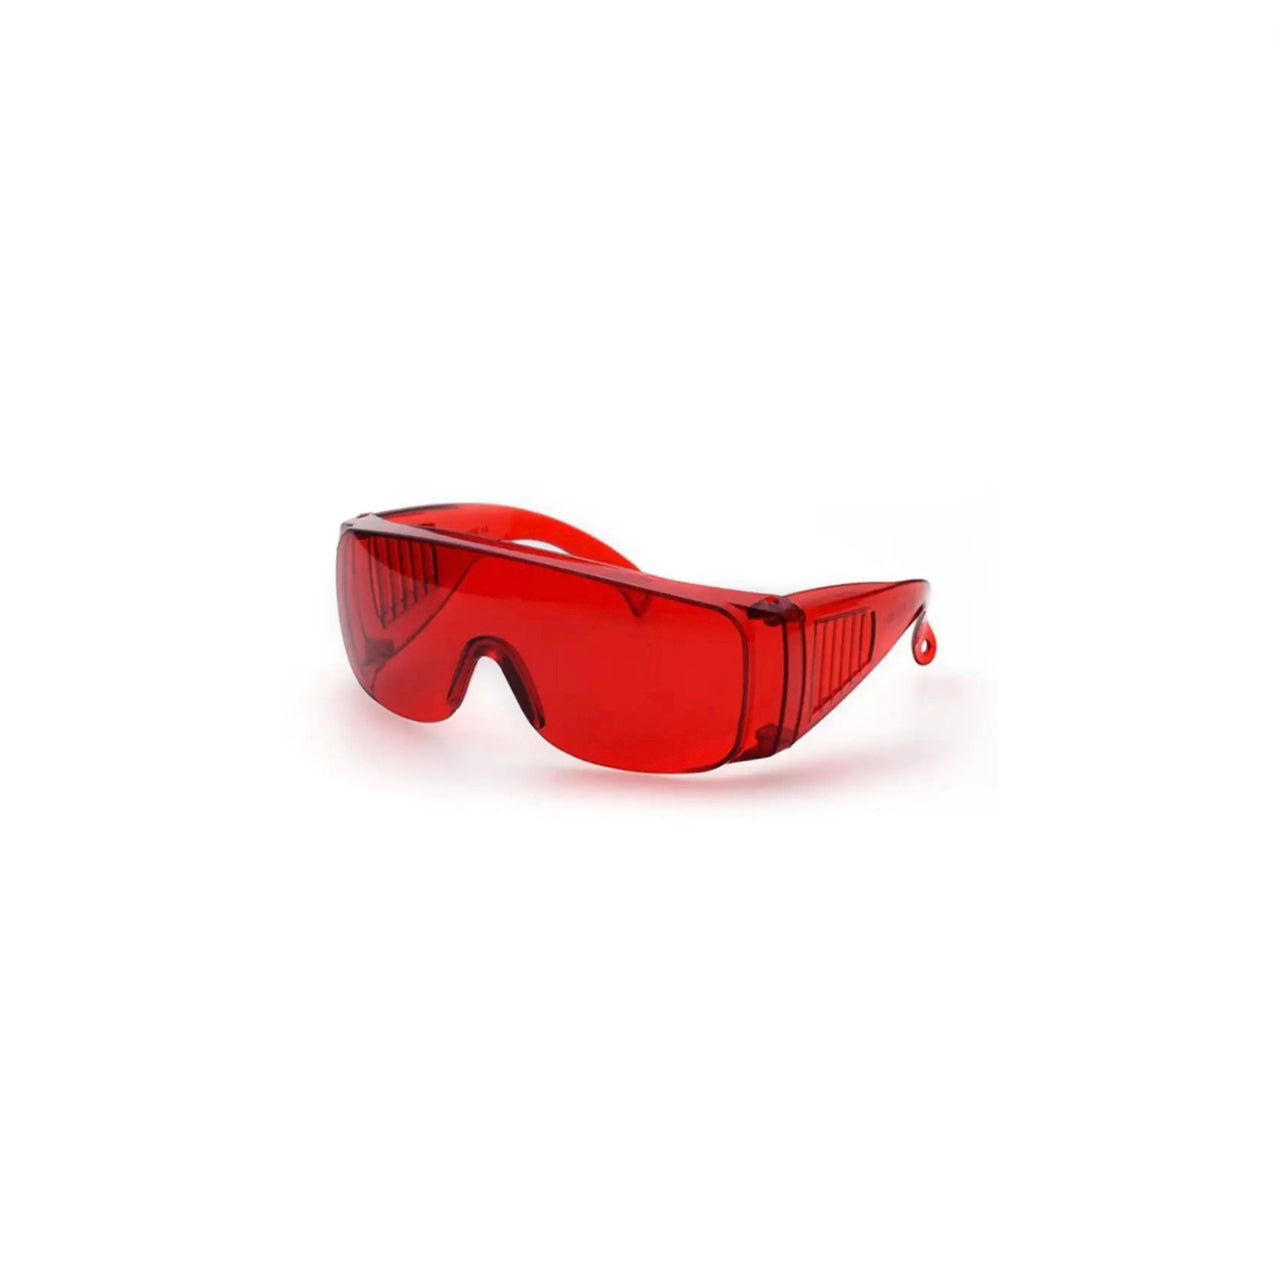 Protective UV Red Glasses